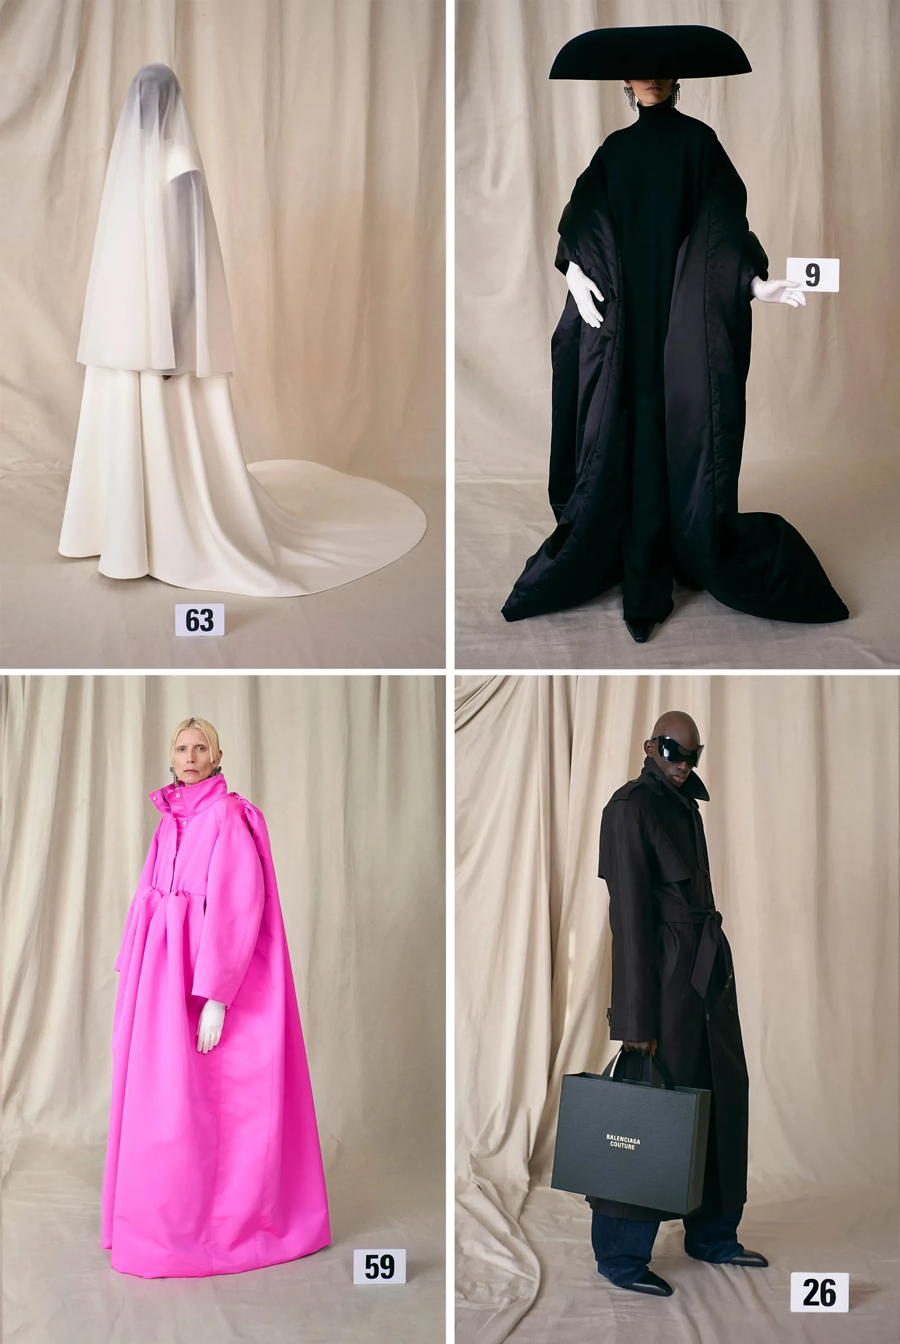 Thời trang Haute Couture tái tạo lại sức sống cho Balenciaga - Ảnh 5